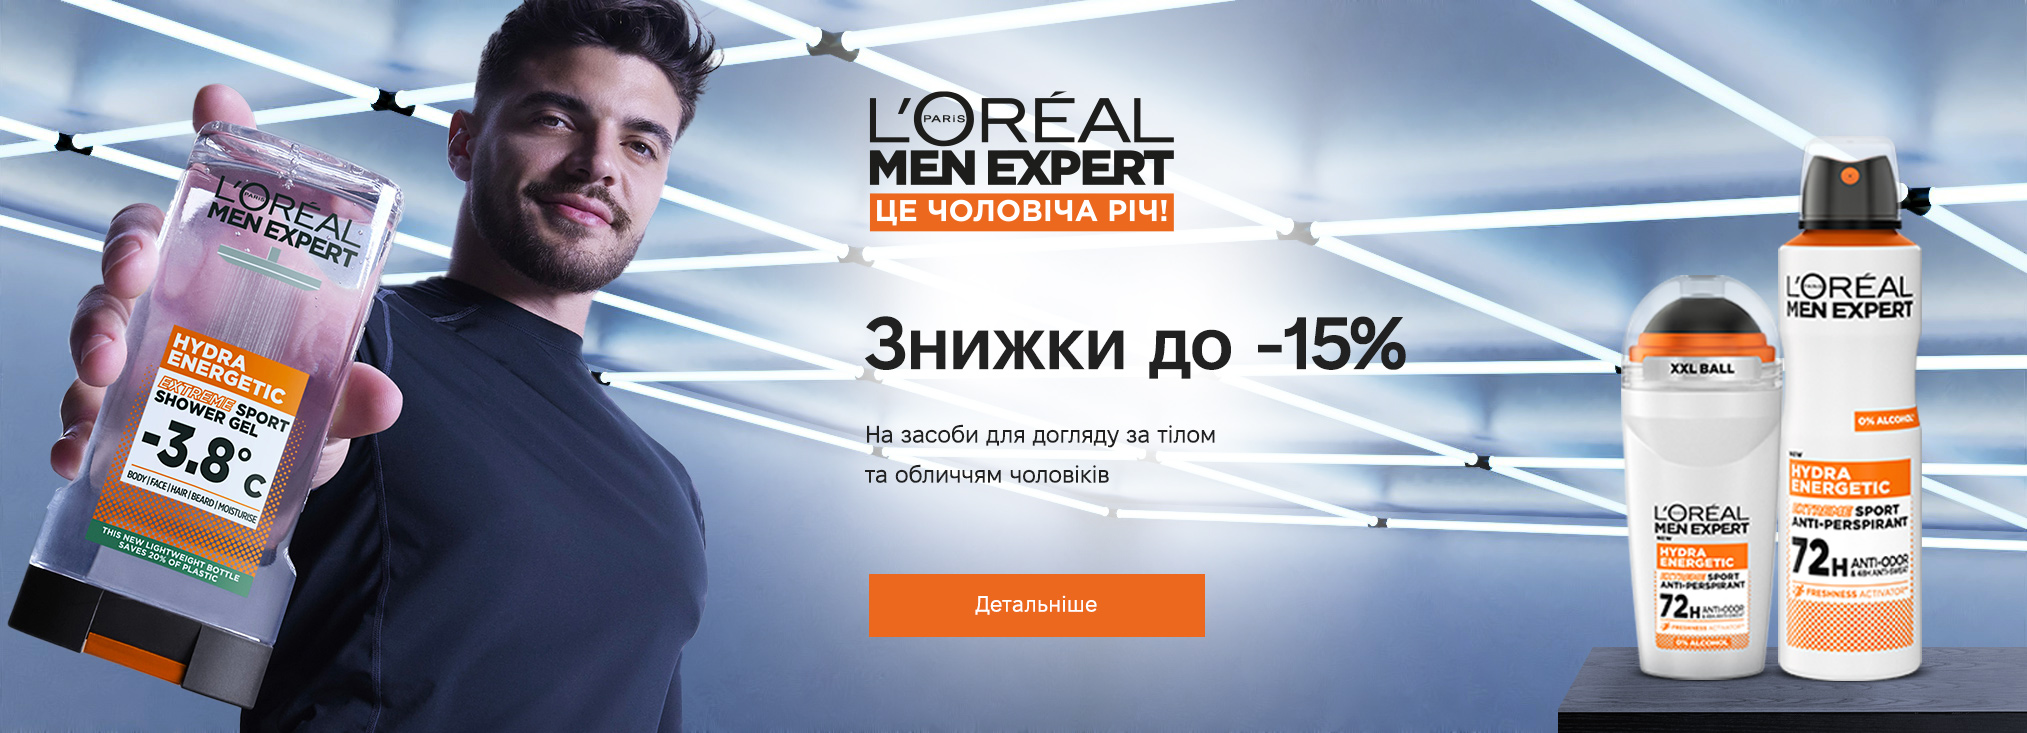 L'Oreal Paris Men Expert_20280